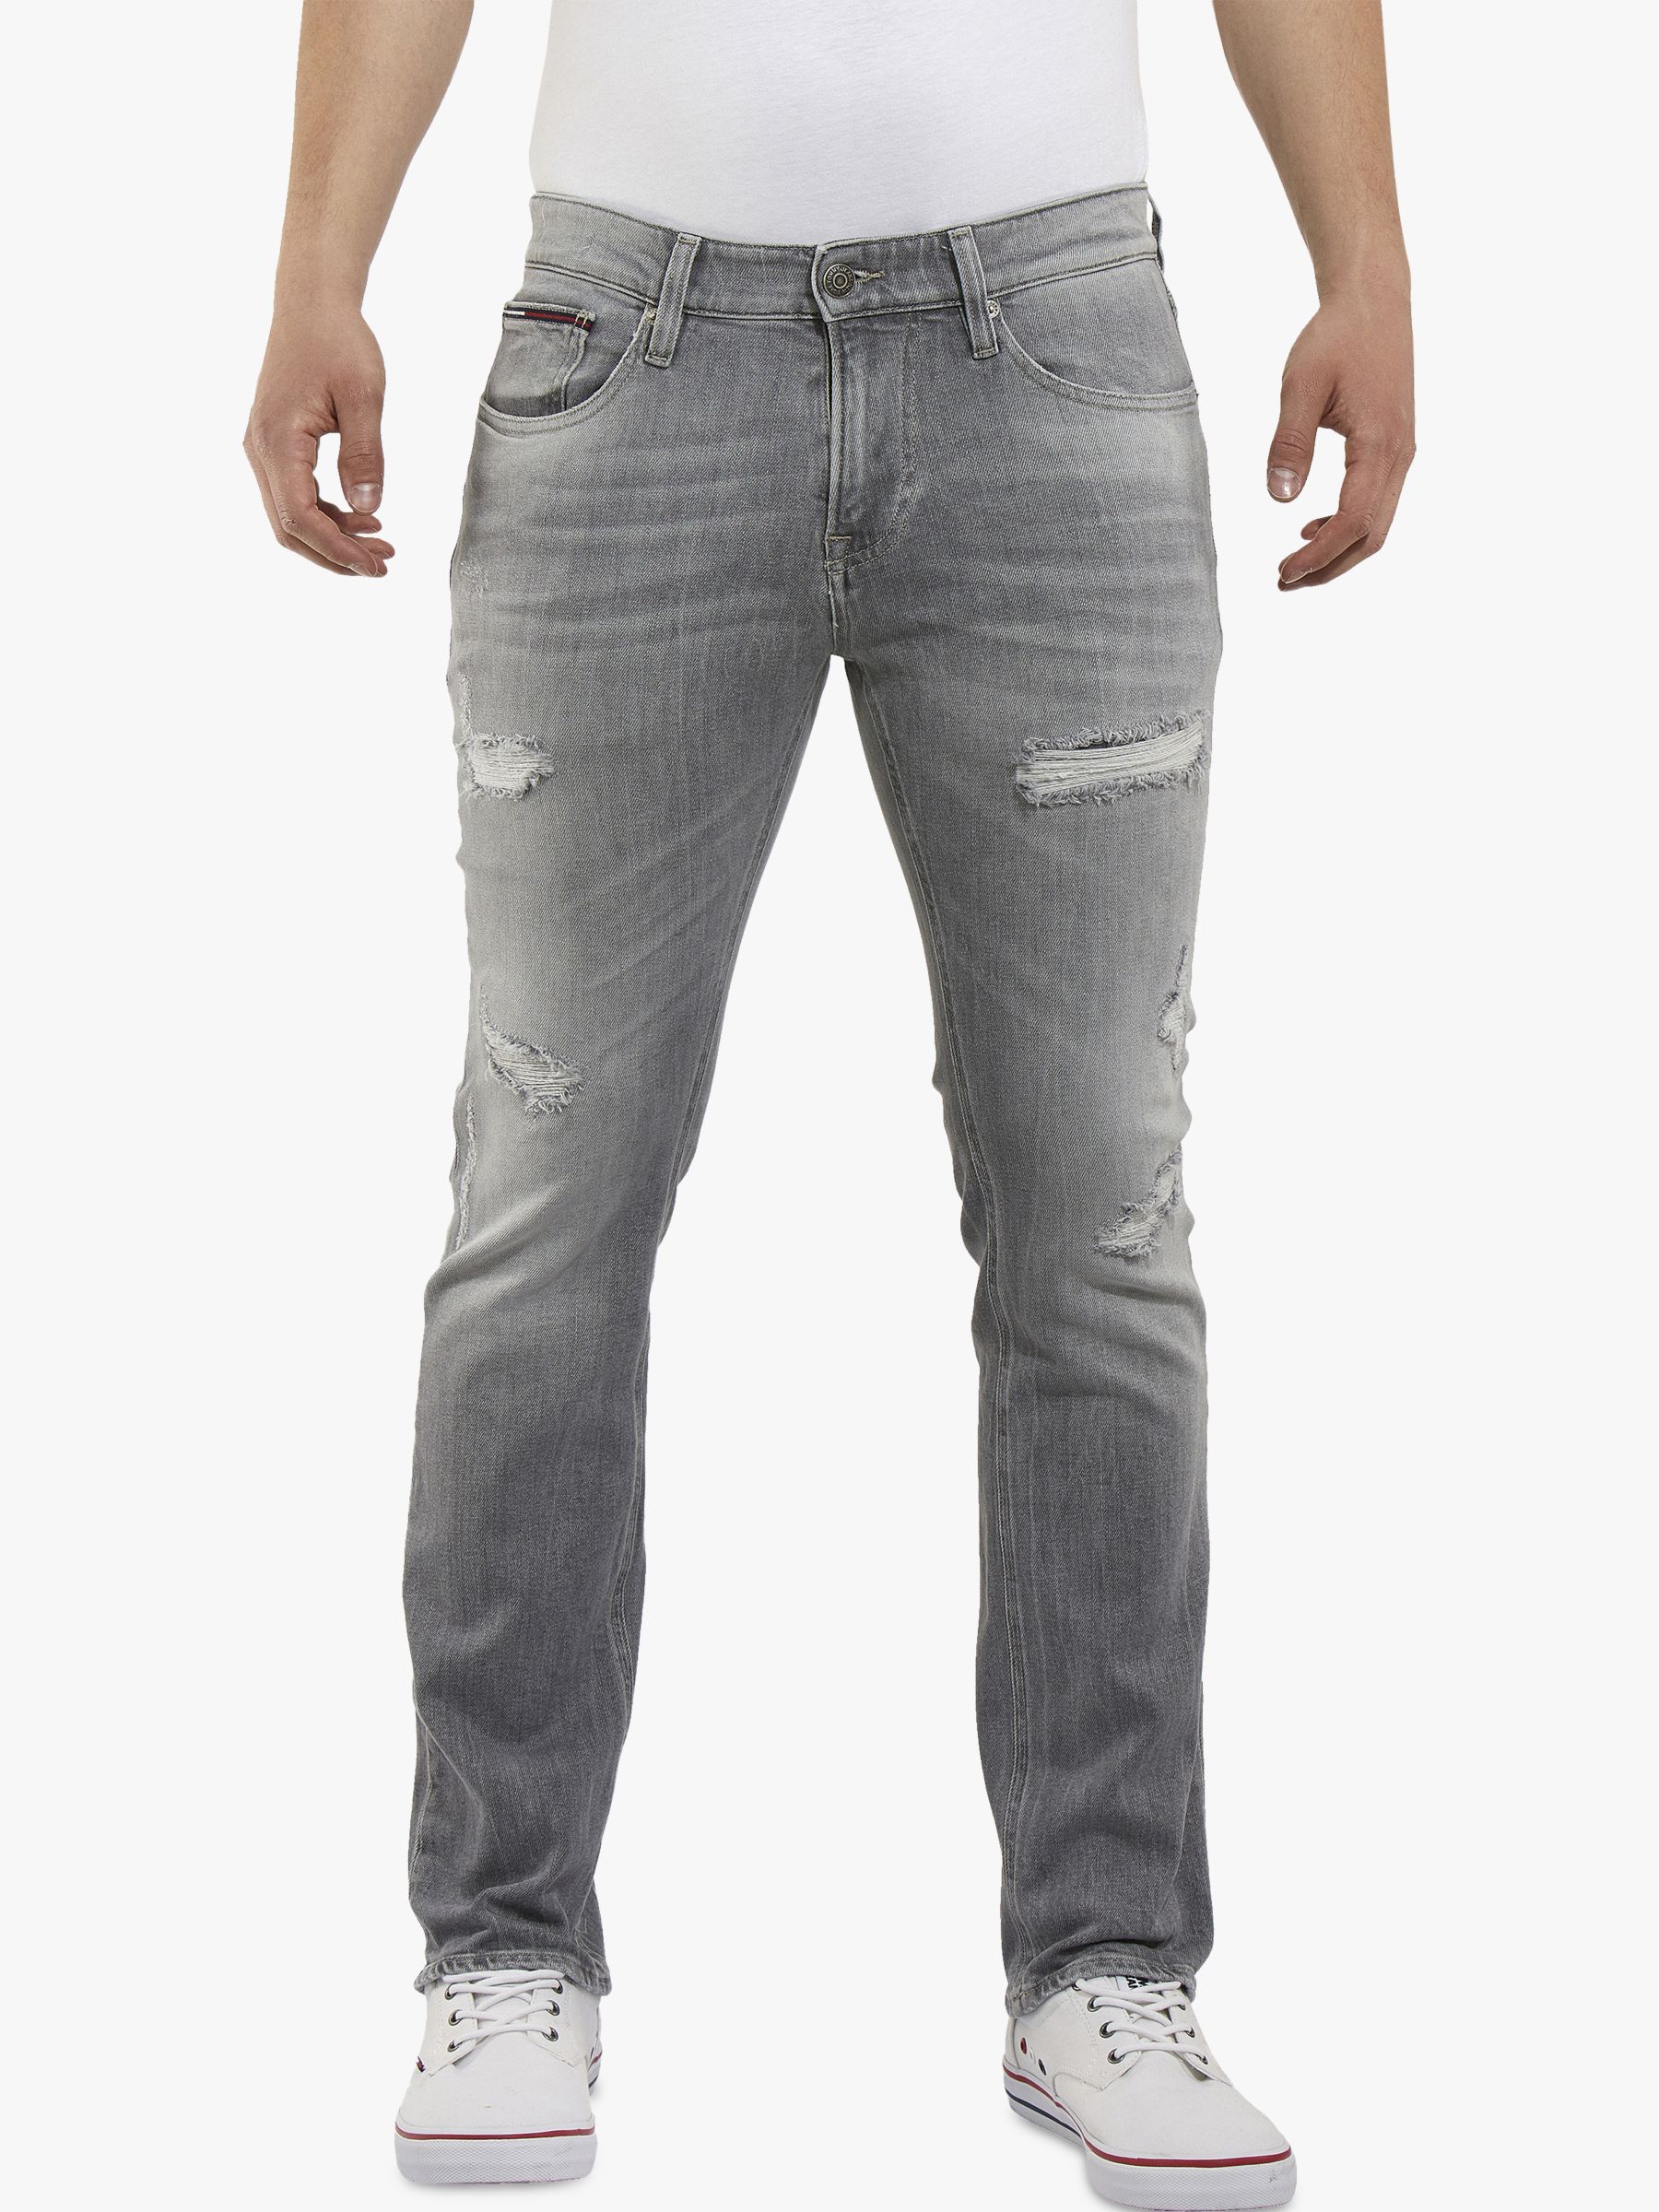 tommy hilfiger grey jeans